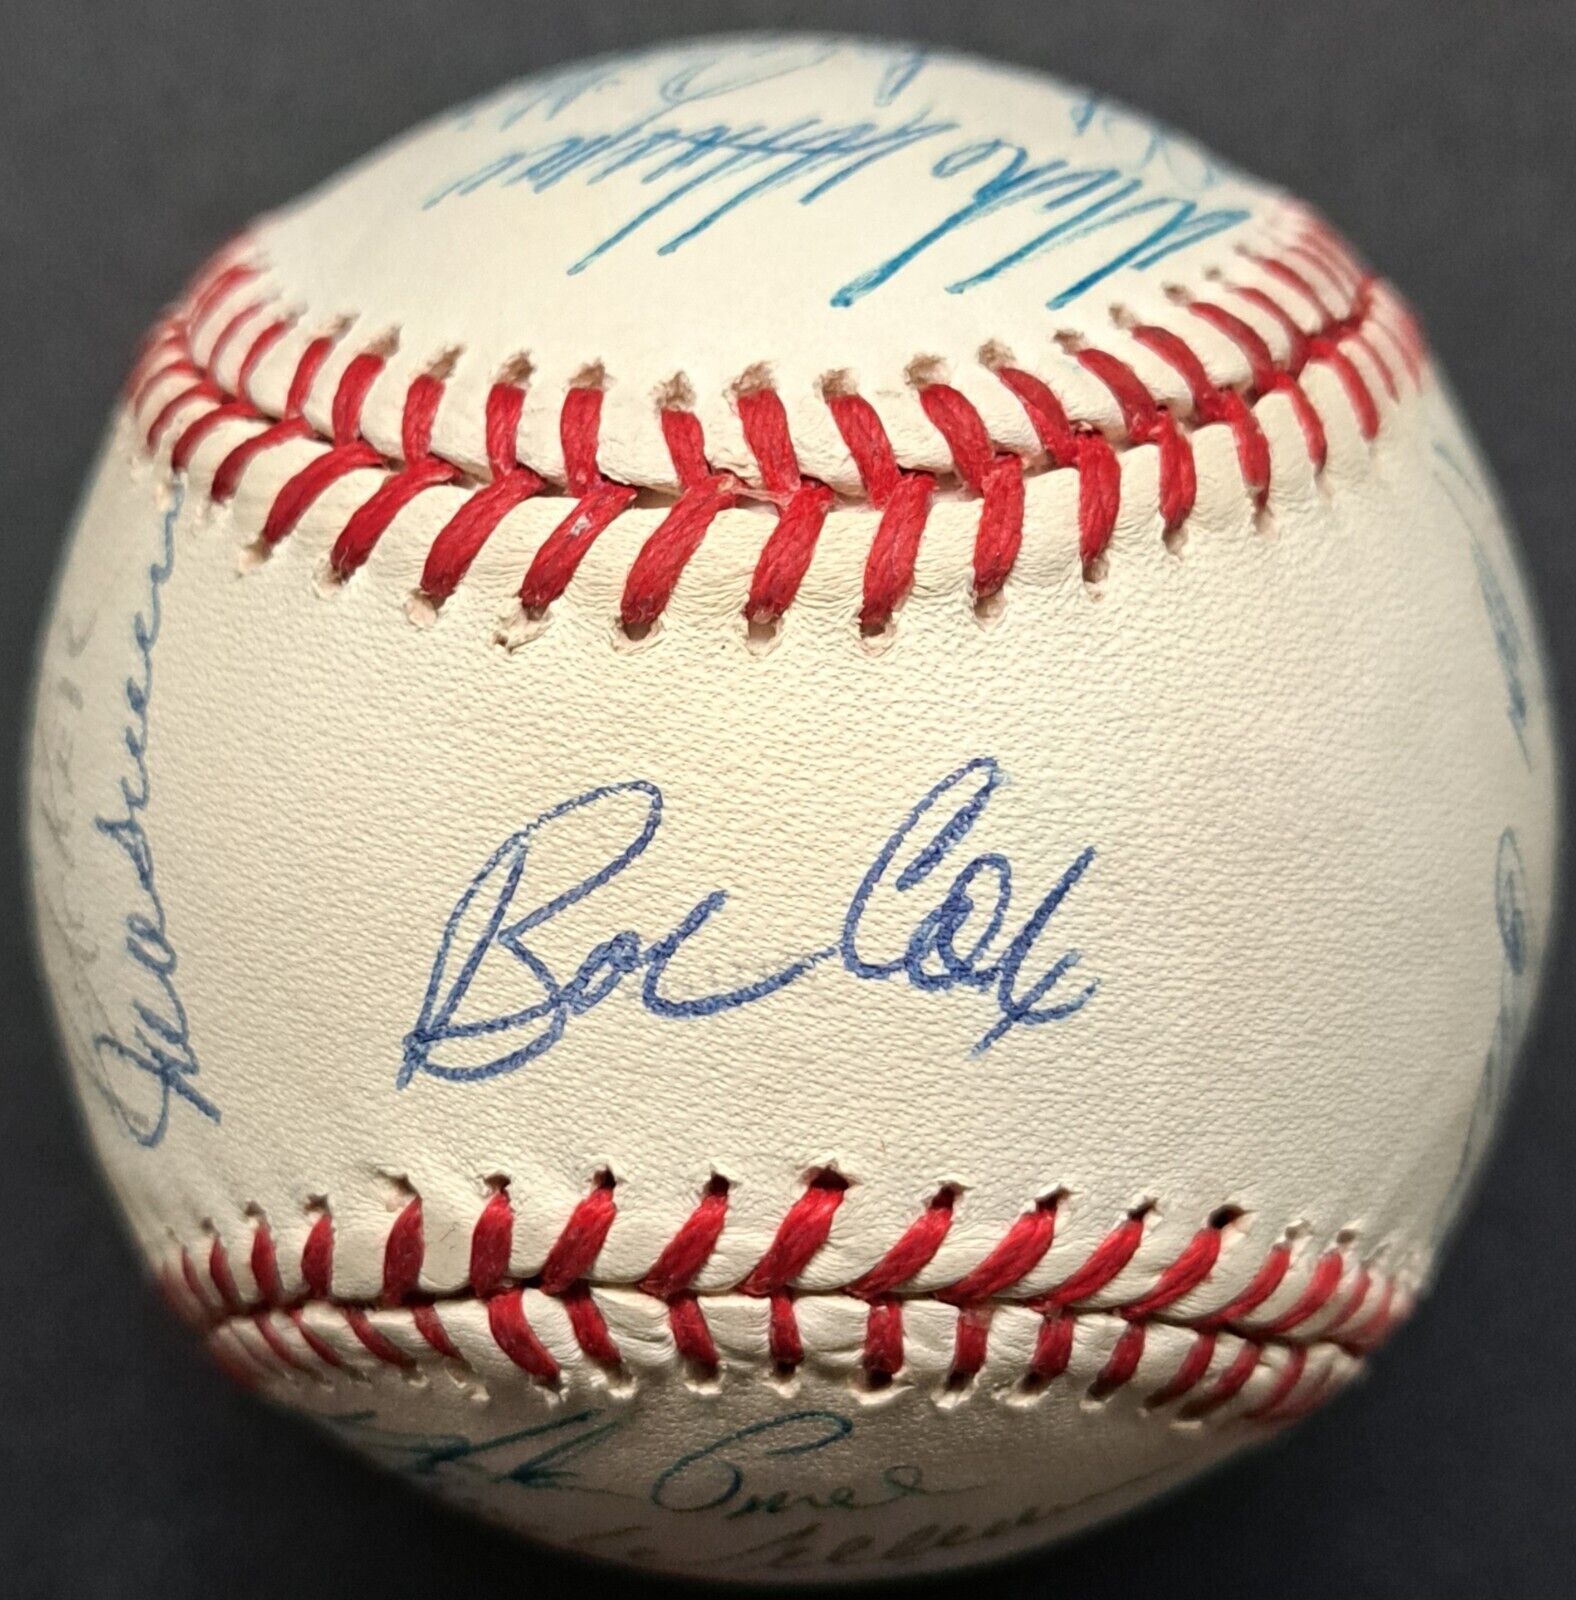 Autographed MLB Photos, Autographed Photos, MLB Autographed